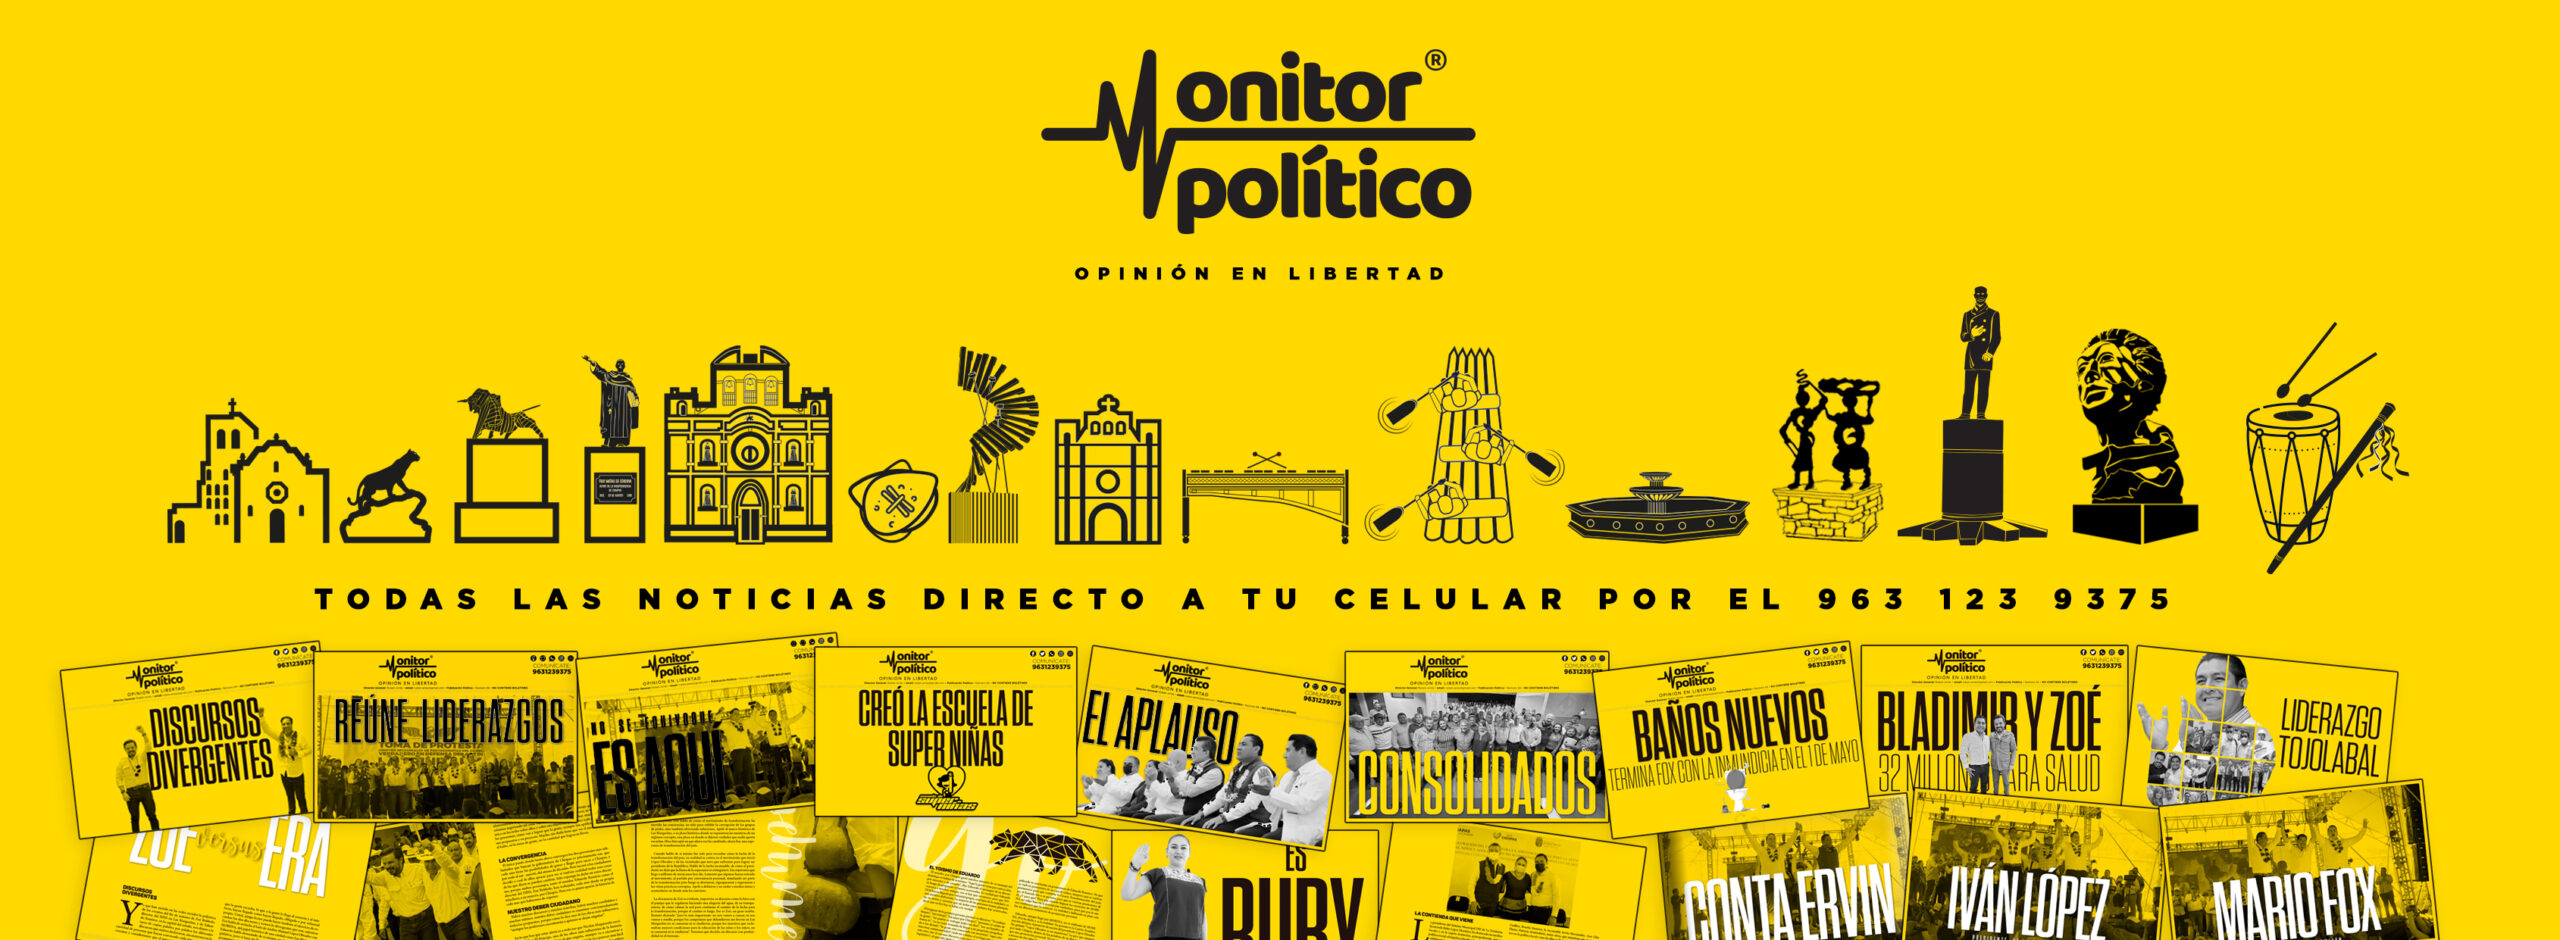 Monitor Político